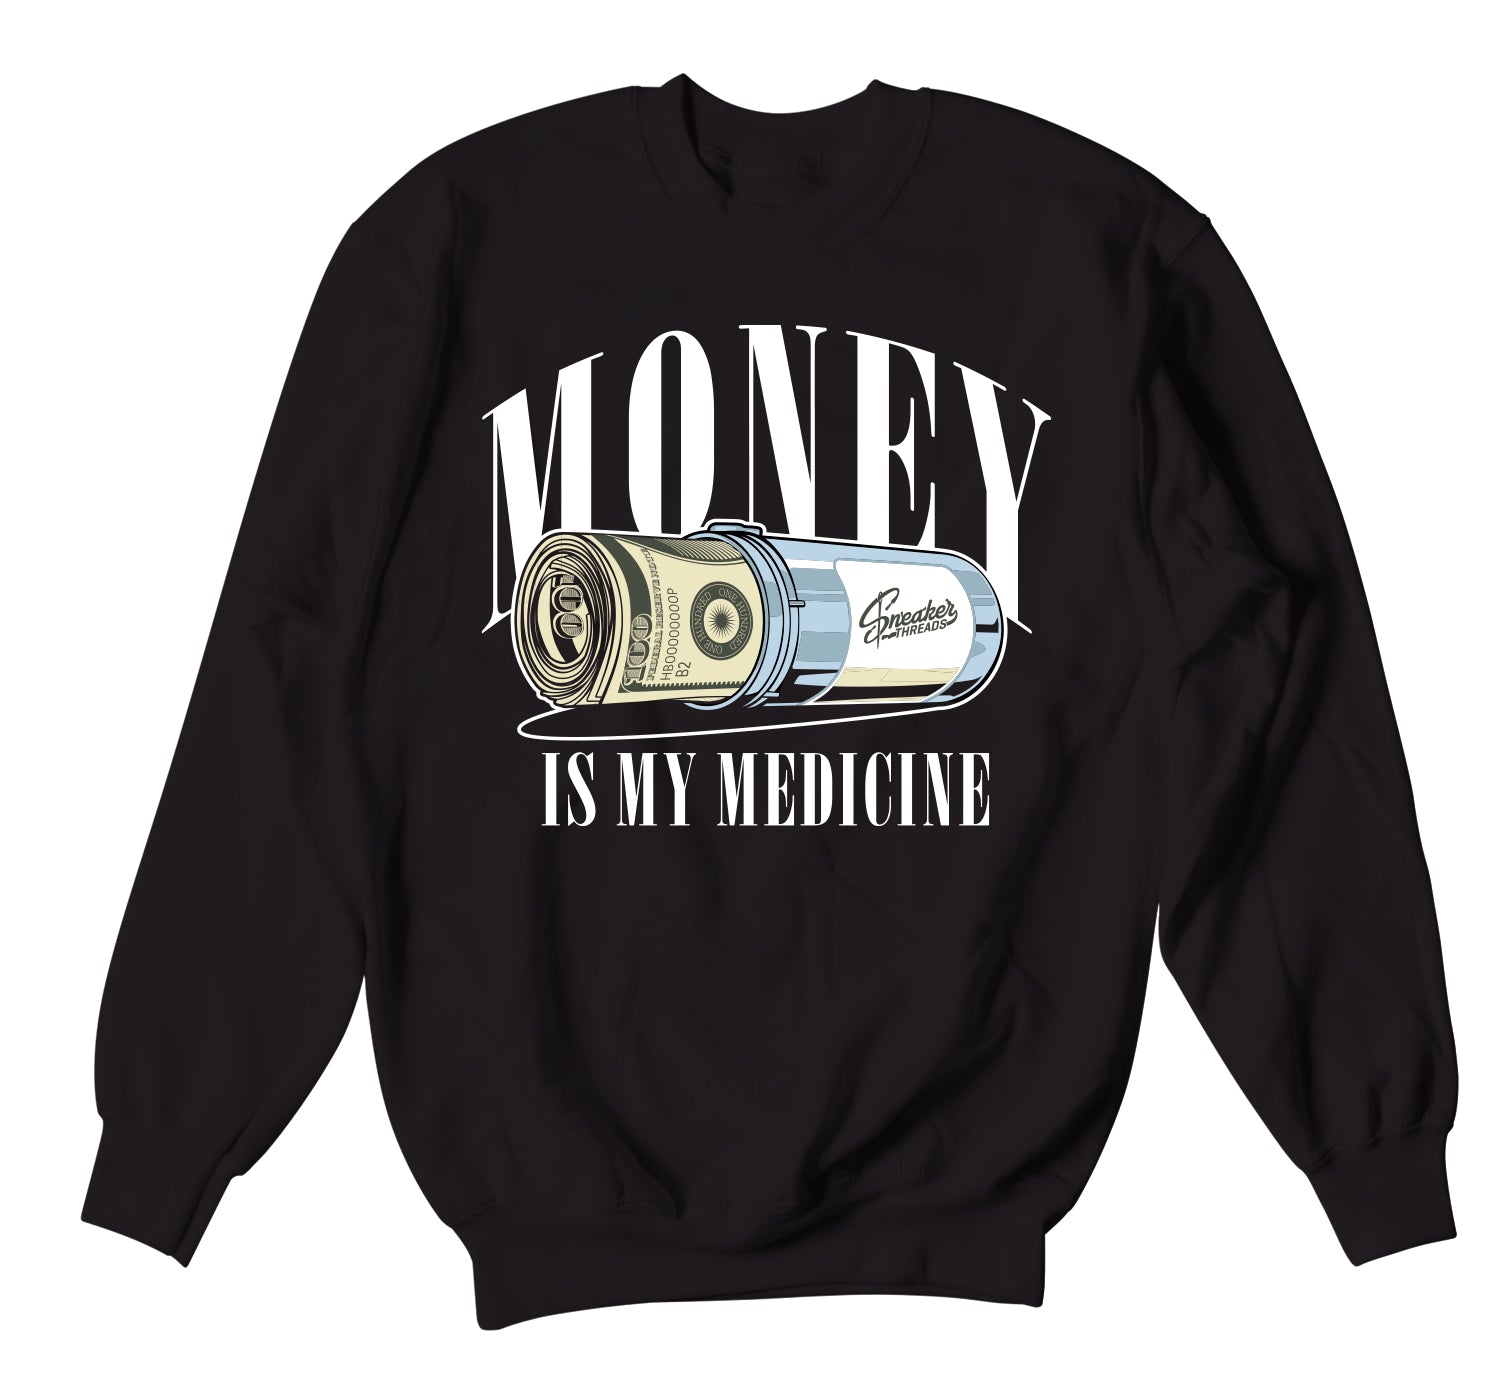 350 Blue Tint Sweater - Money Medicine - Black